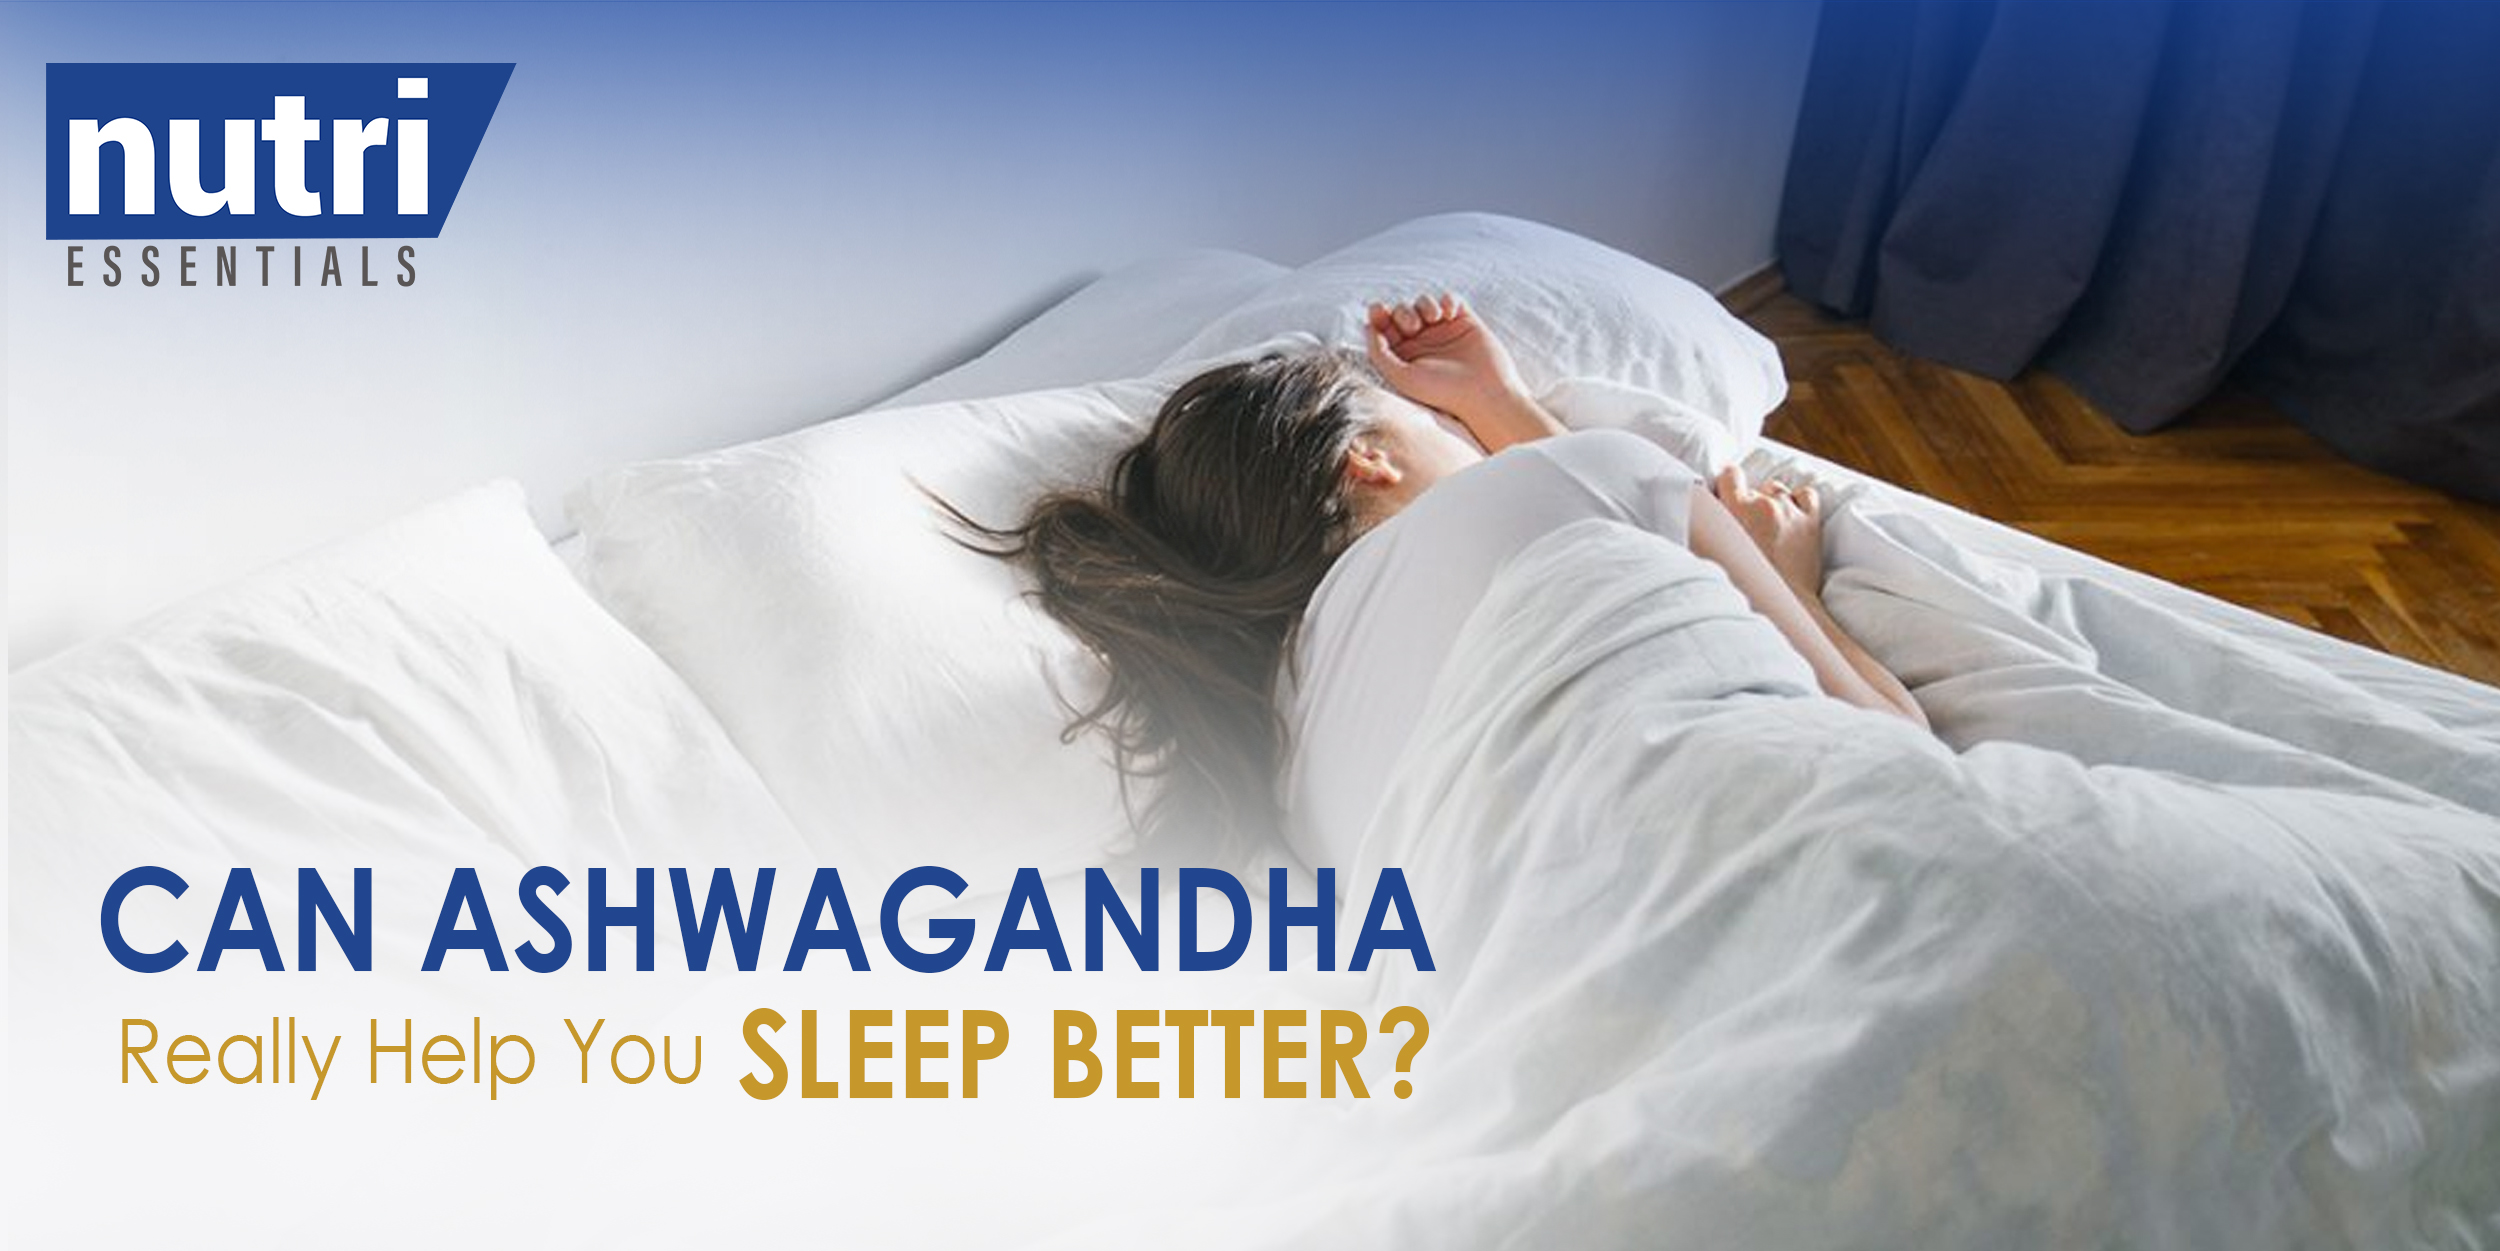 CAN ASHWAGANDHA REALLY HELP YOU SLEEP BETTER?